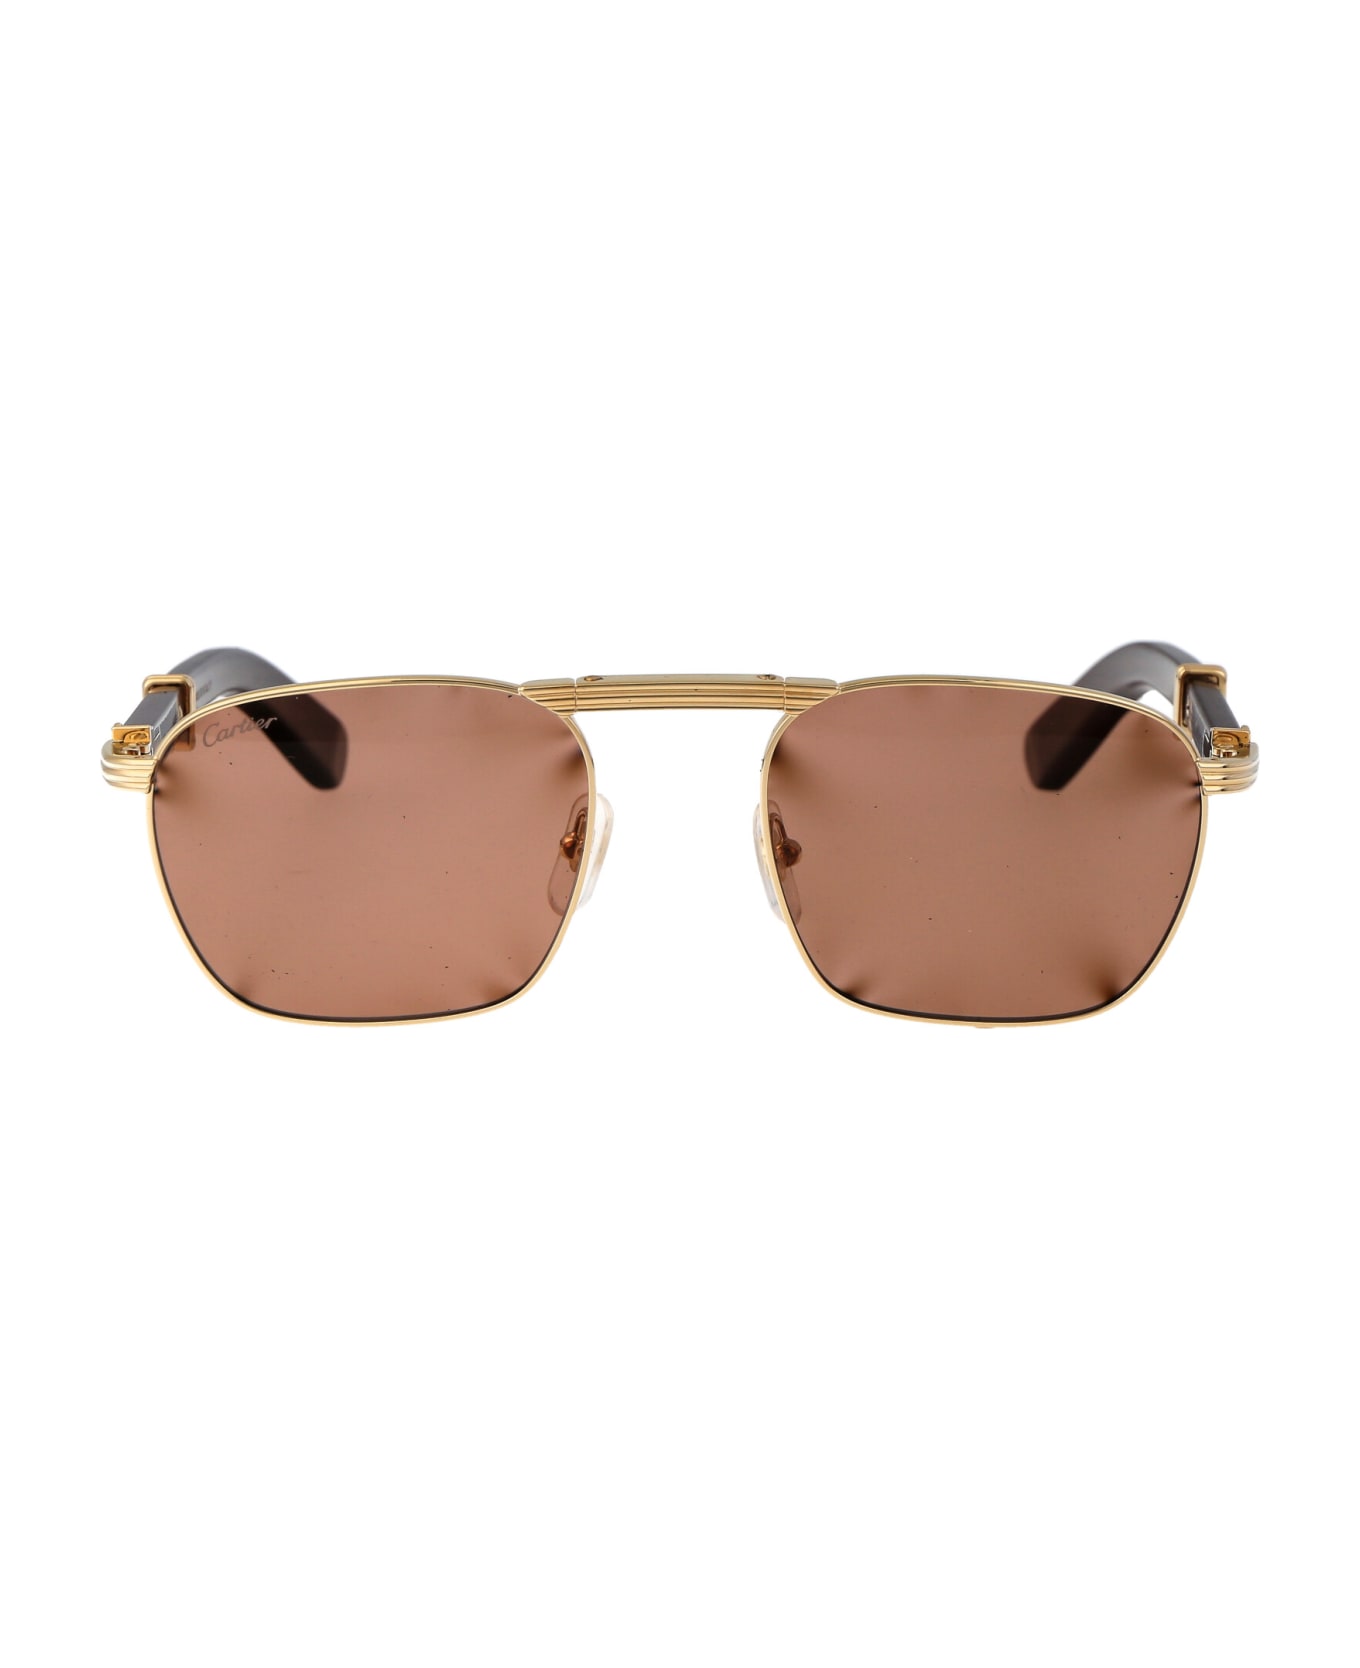 Cartier Eyewear Ct0428s Sunglasses - 001 GOLD BURGUNDY BROWN サングラス